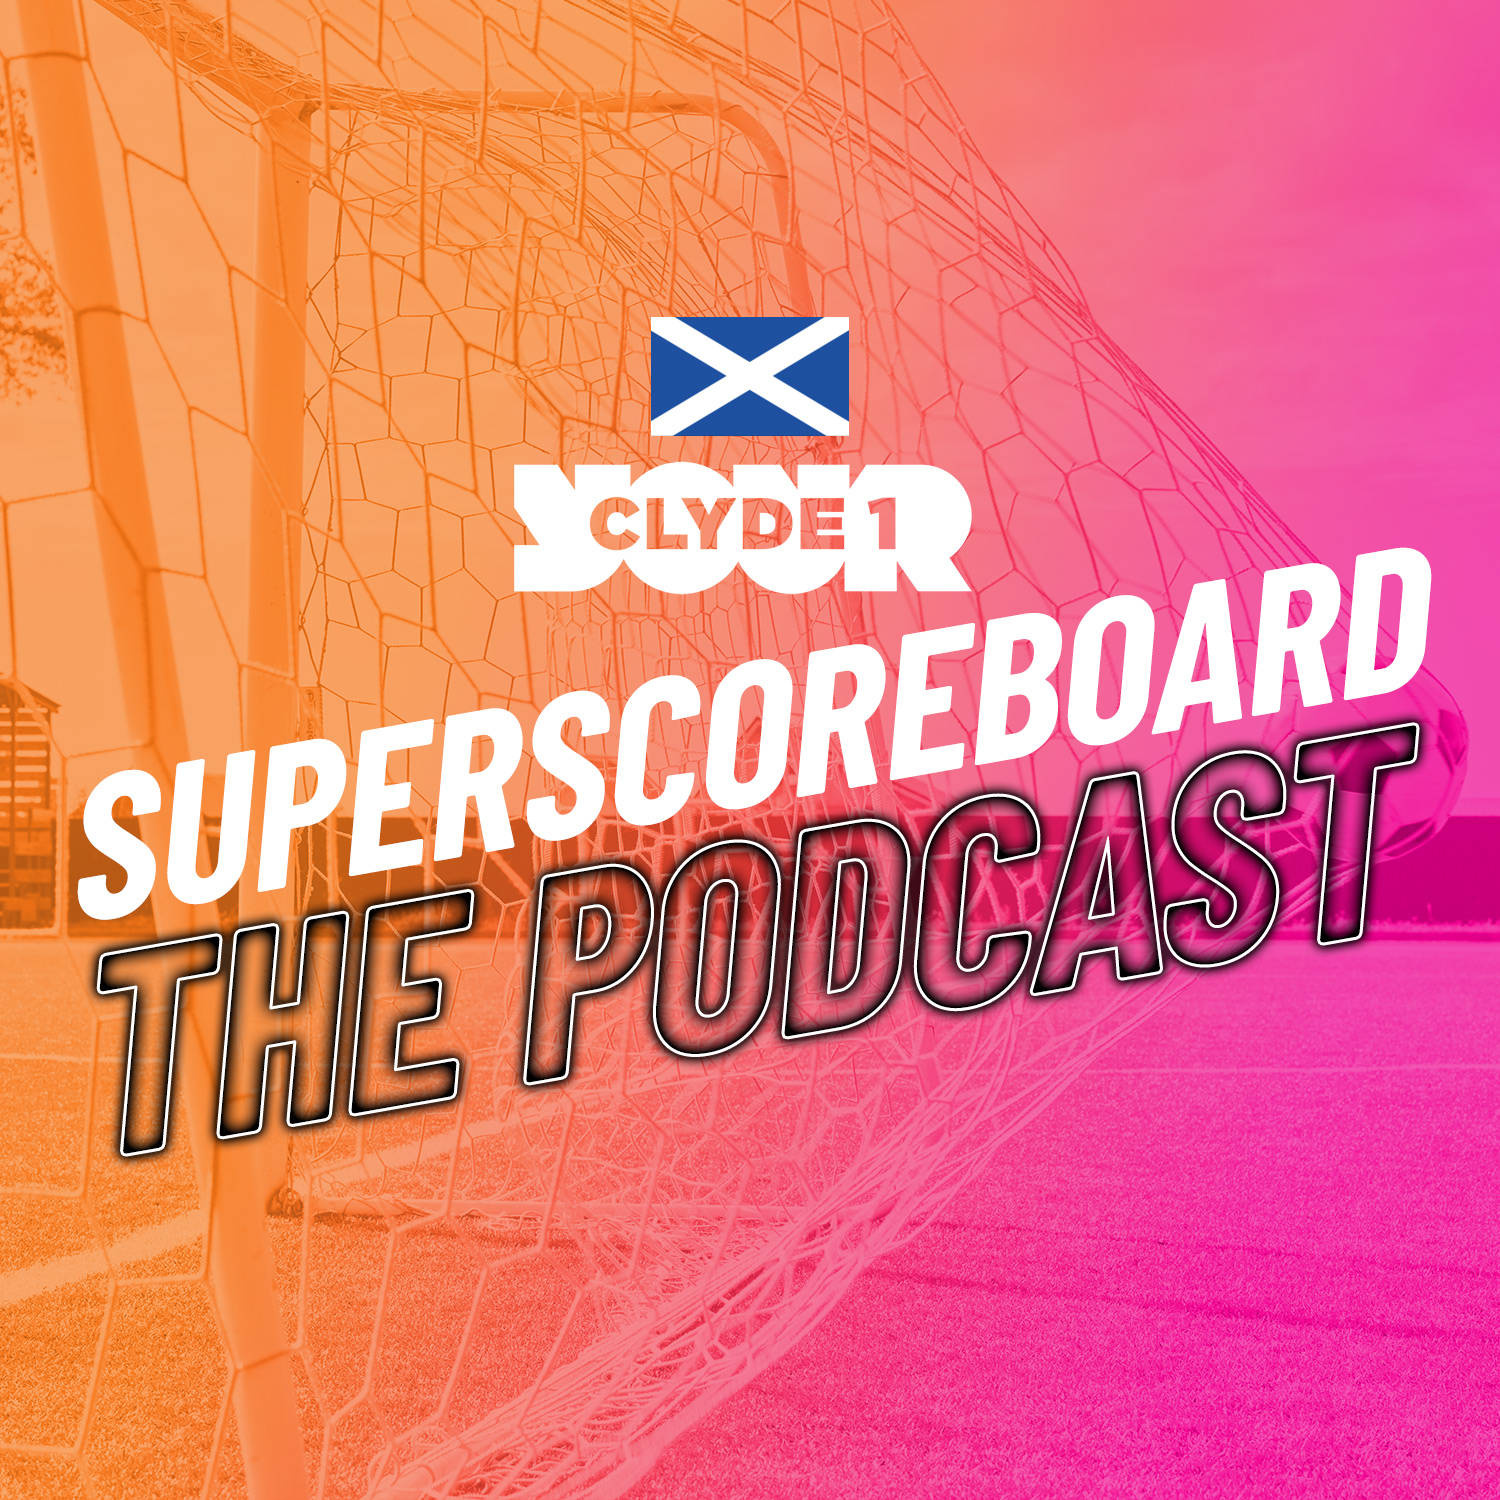 Thursday 1st February Clyde 1 Superscoreboard